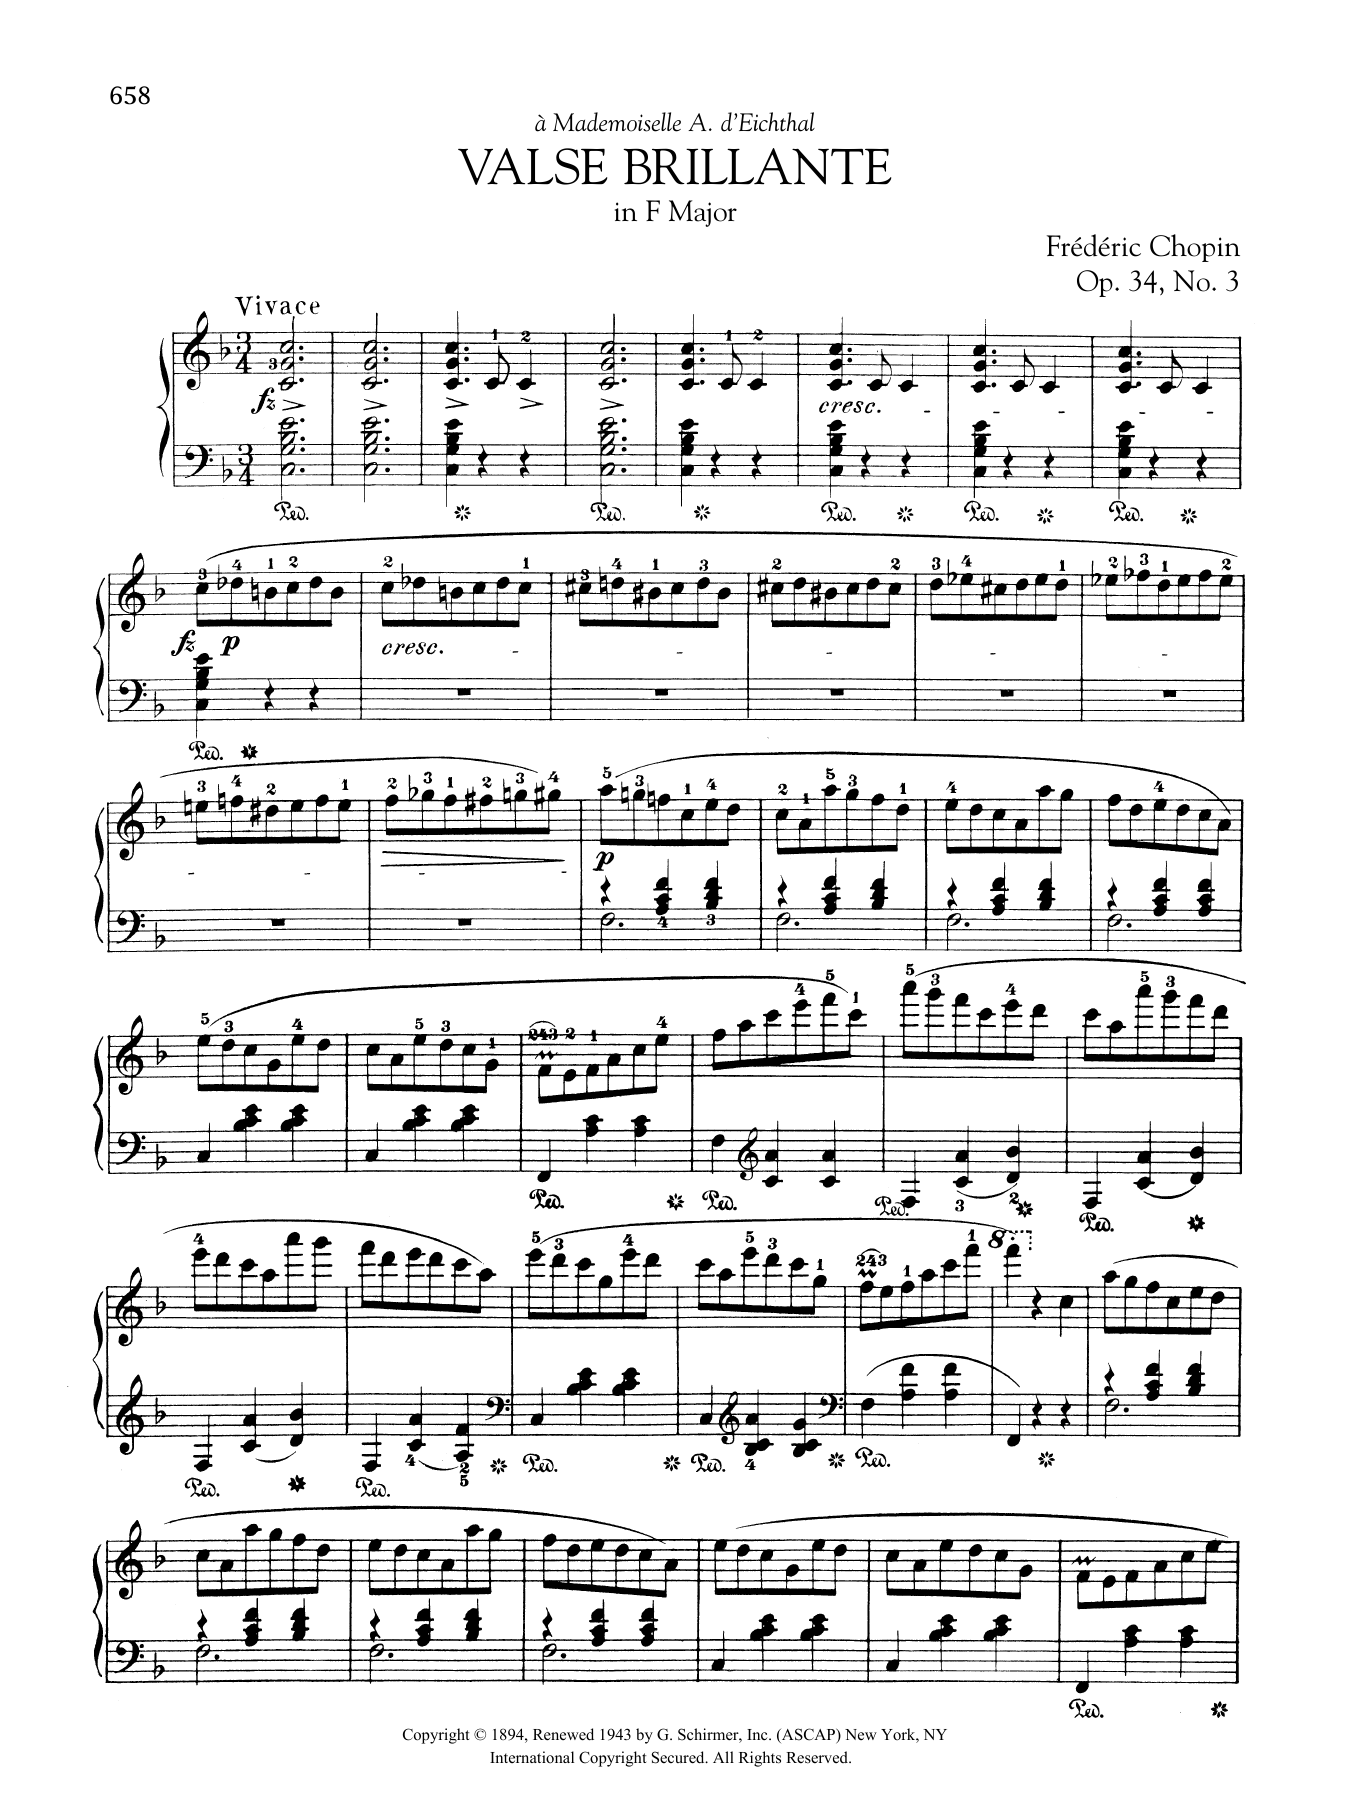 Valse brillante in F Major, Op. 34, No. 3 sheet music